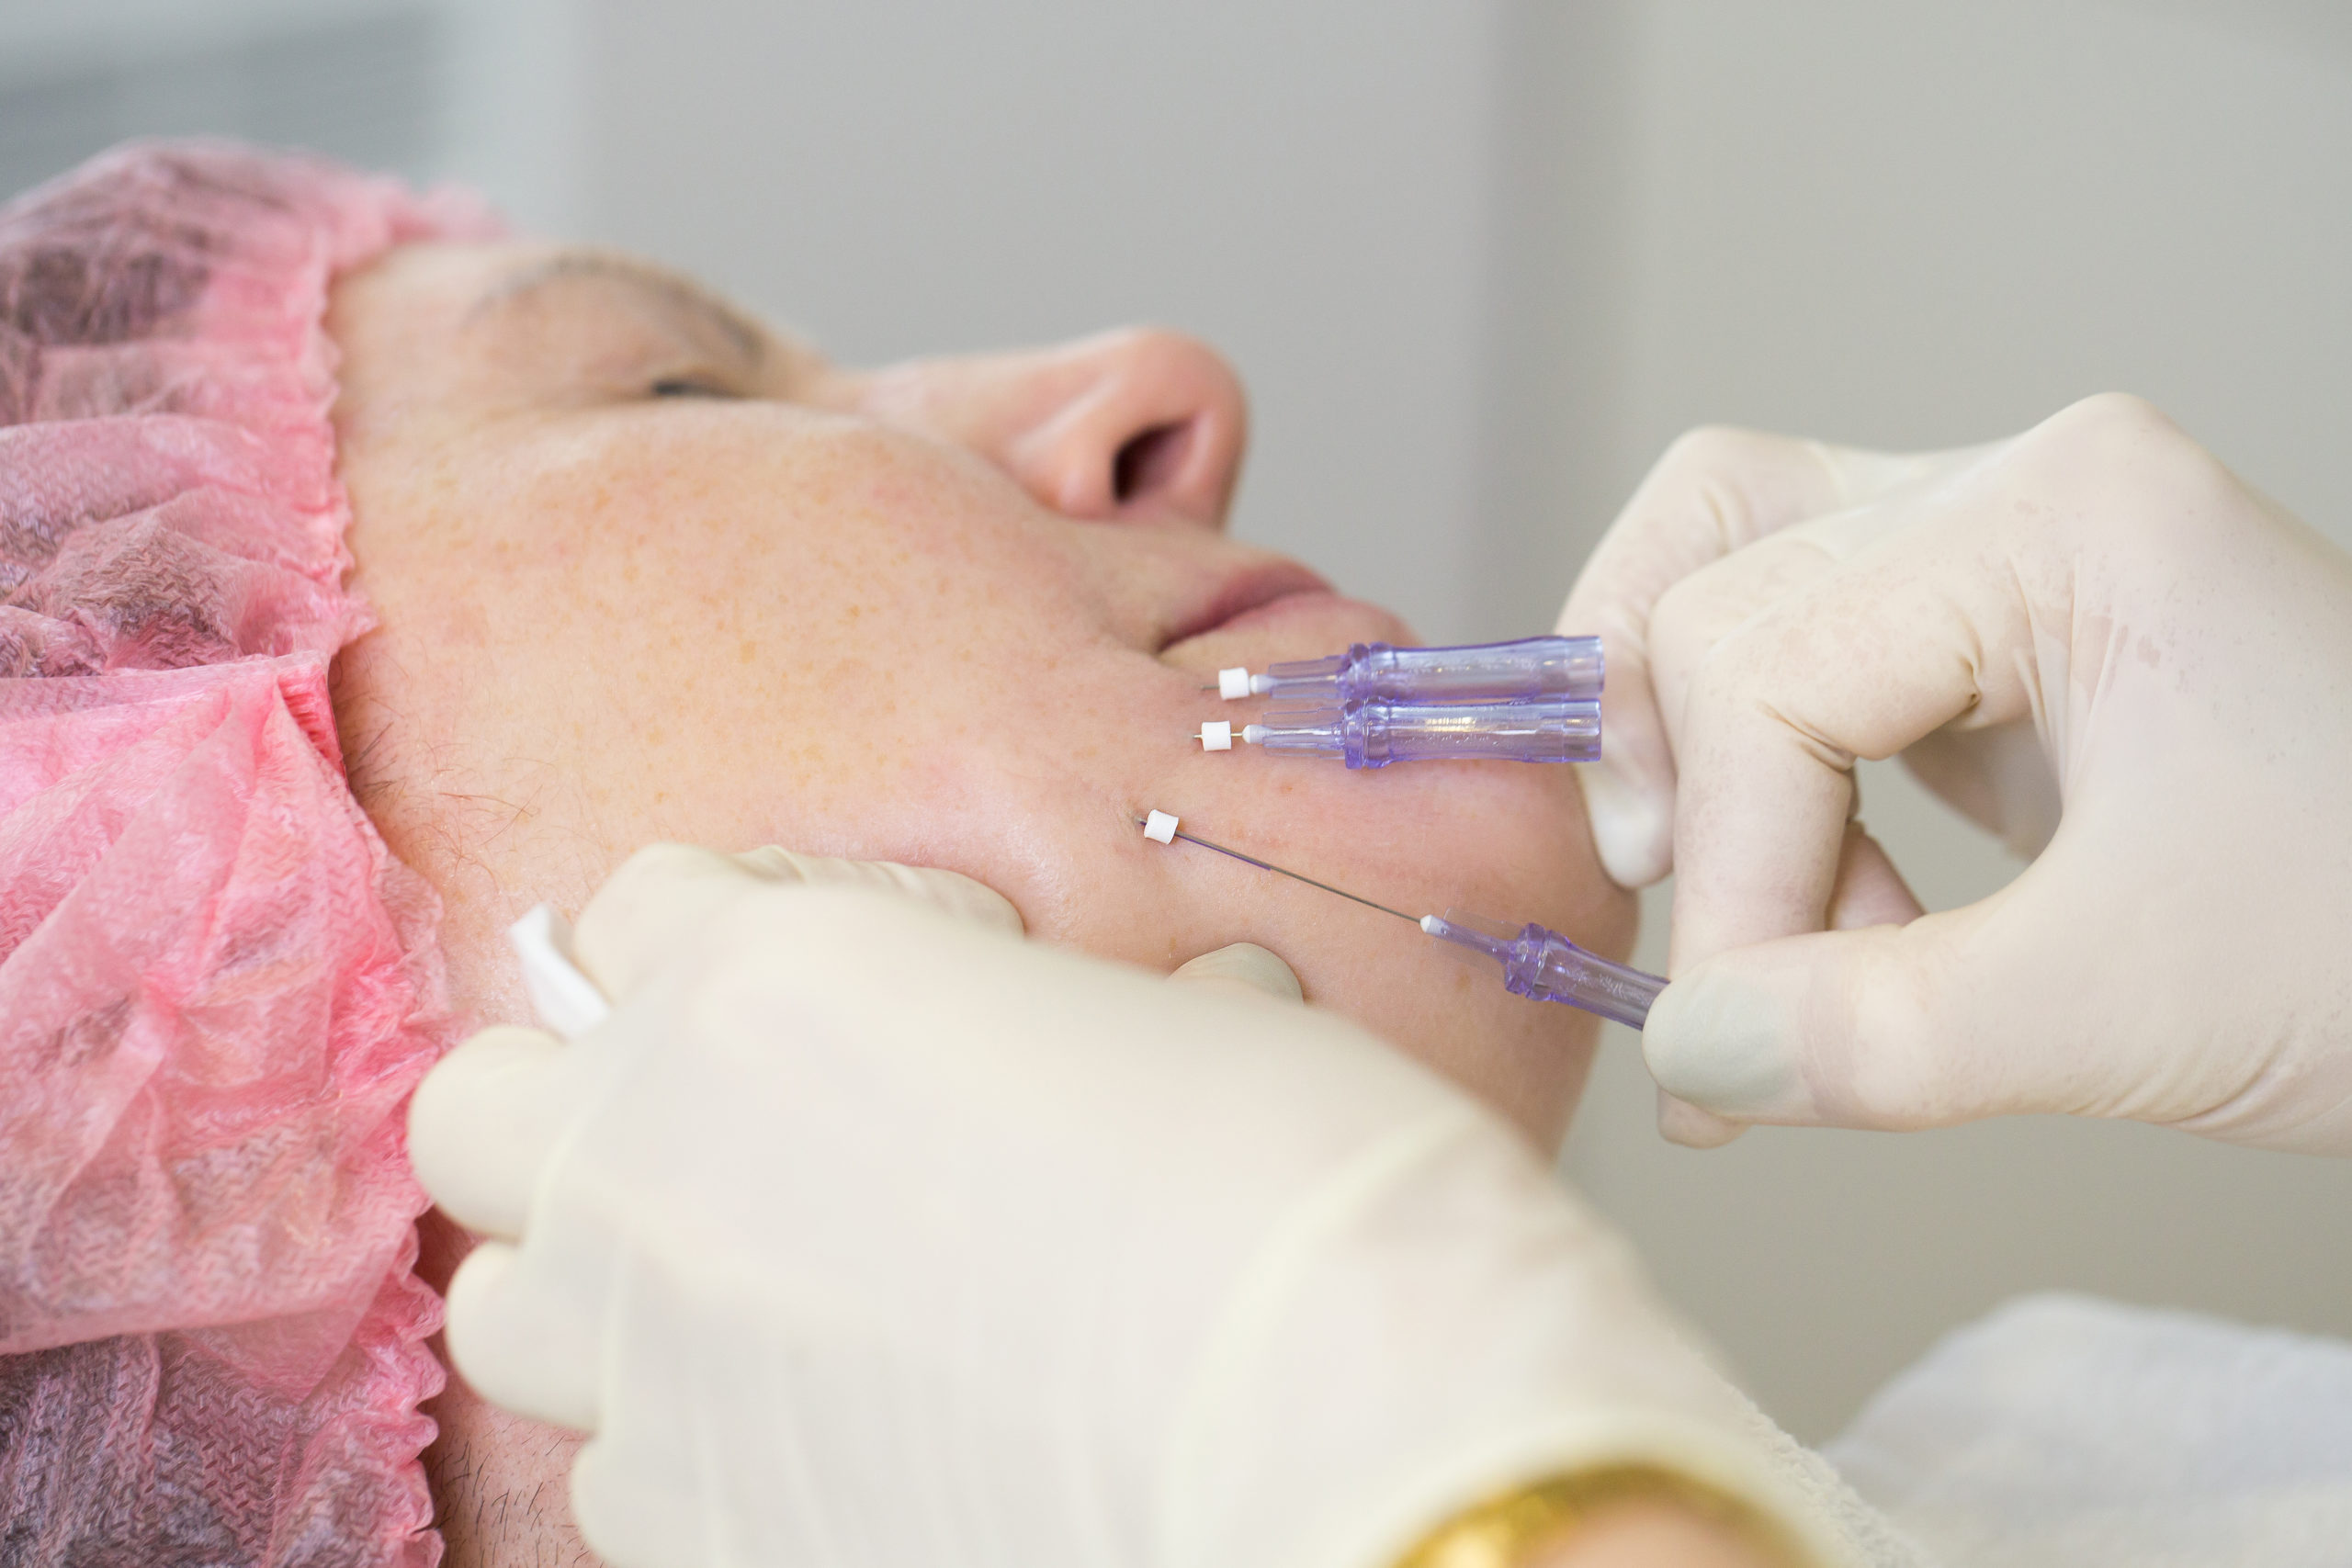 PDO Thread Lift Reversing Time with Non-Surgical Facial Rejuvenation